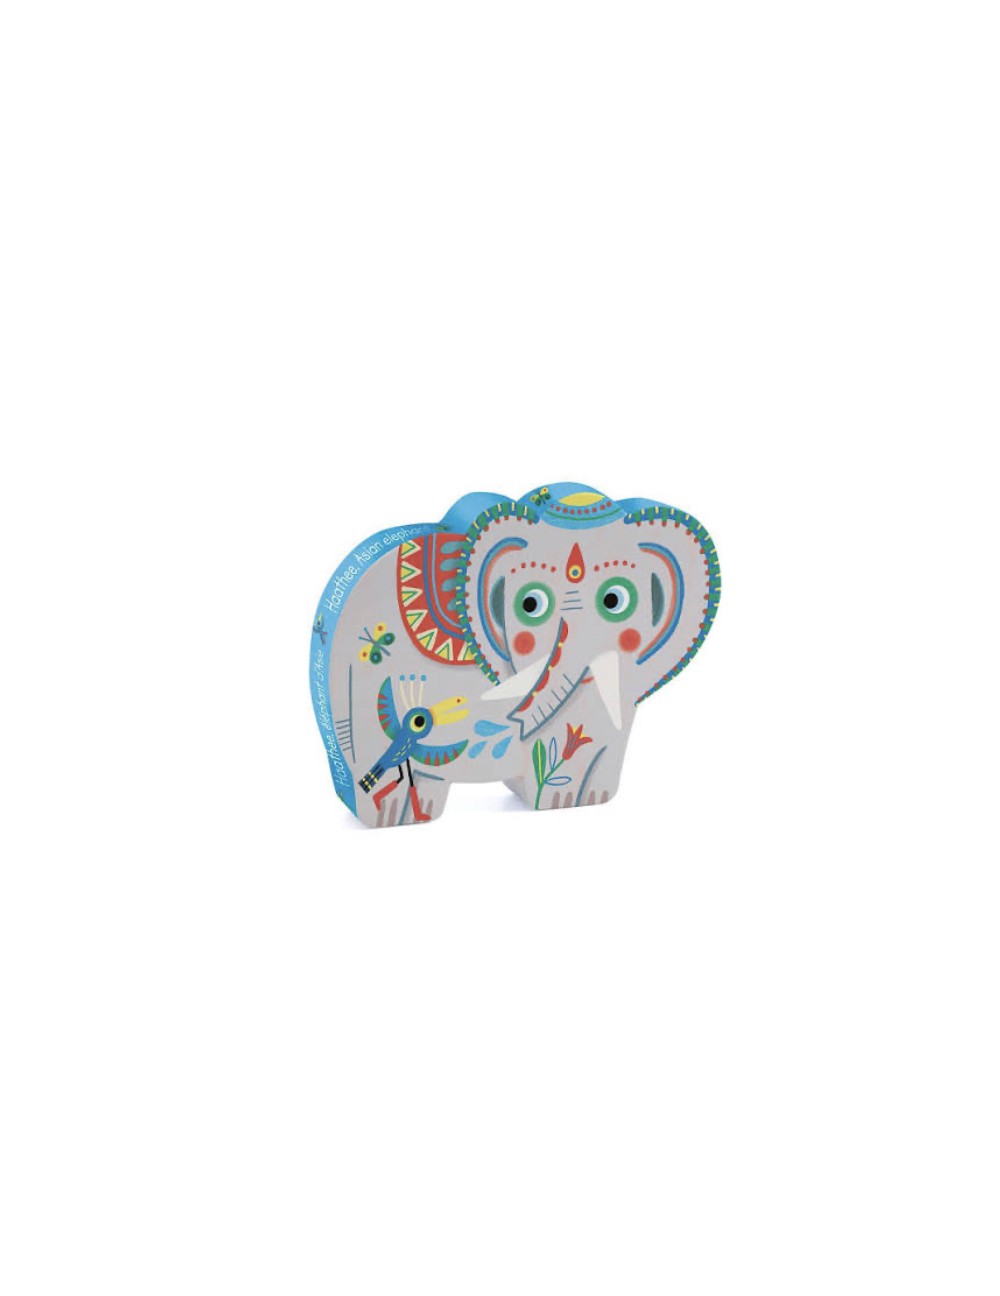 Puzzle Haathee éléphant d'Asie - Djeco